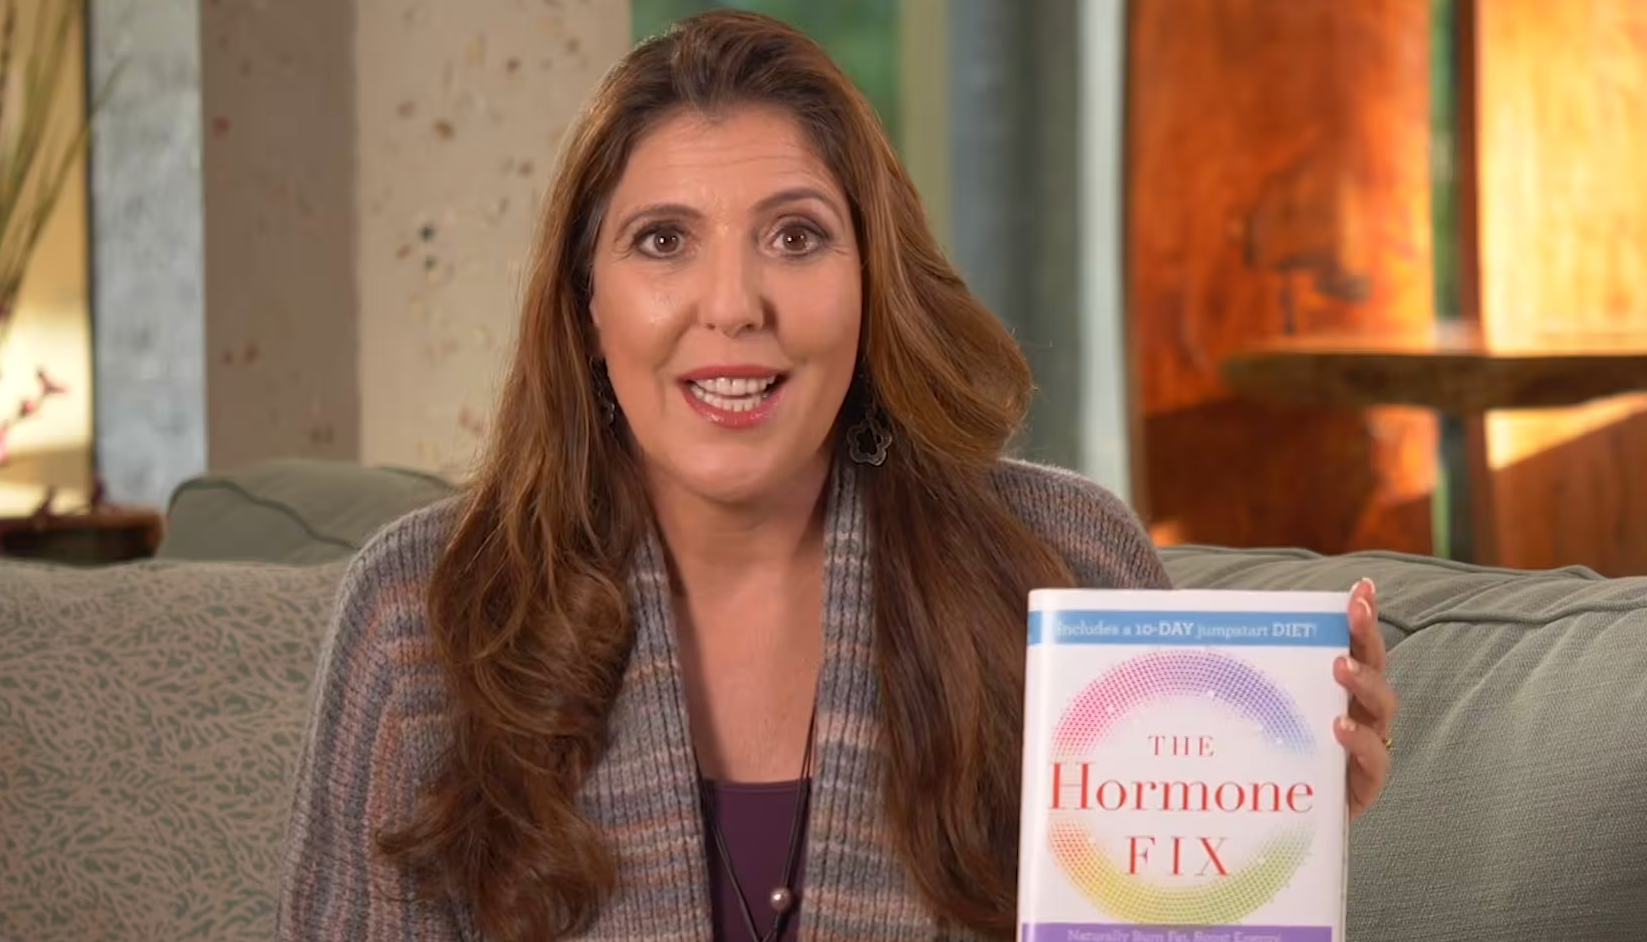 Load video: The Hormone Fix Book Trailer Live